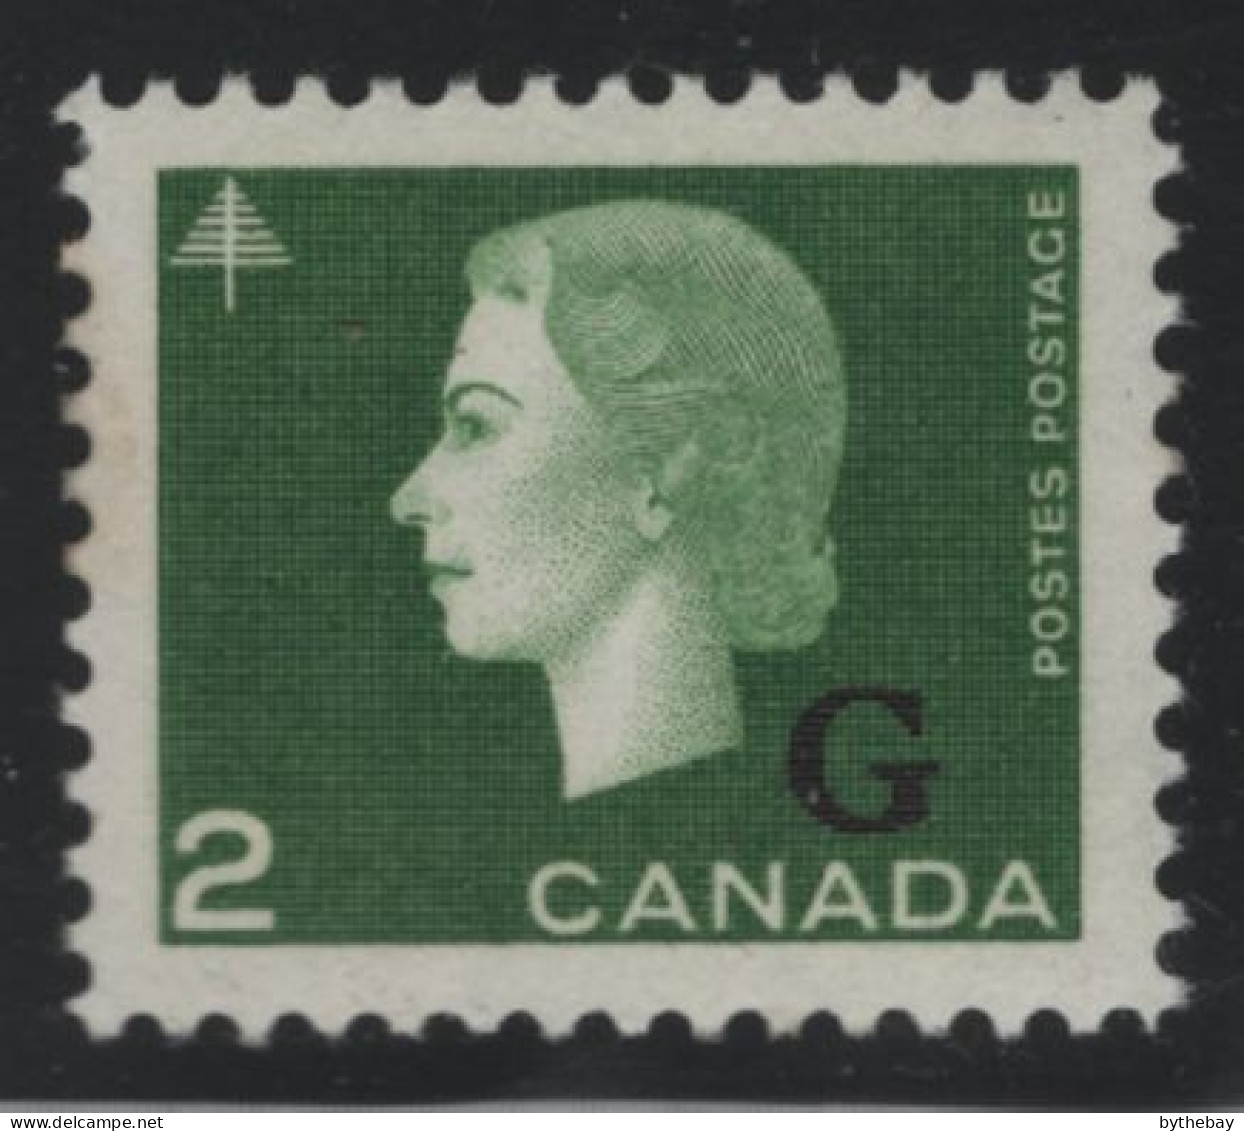 Canada 1963 MNH Sc O47 2c QEII Cameo G Overprint, Glazed Gum - Aufdrucksausgaben